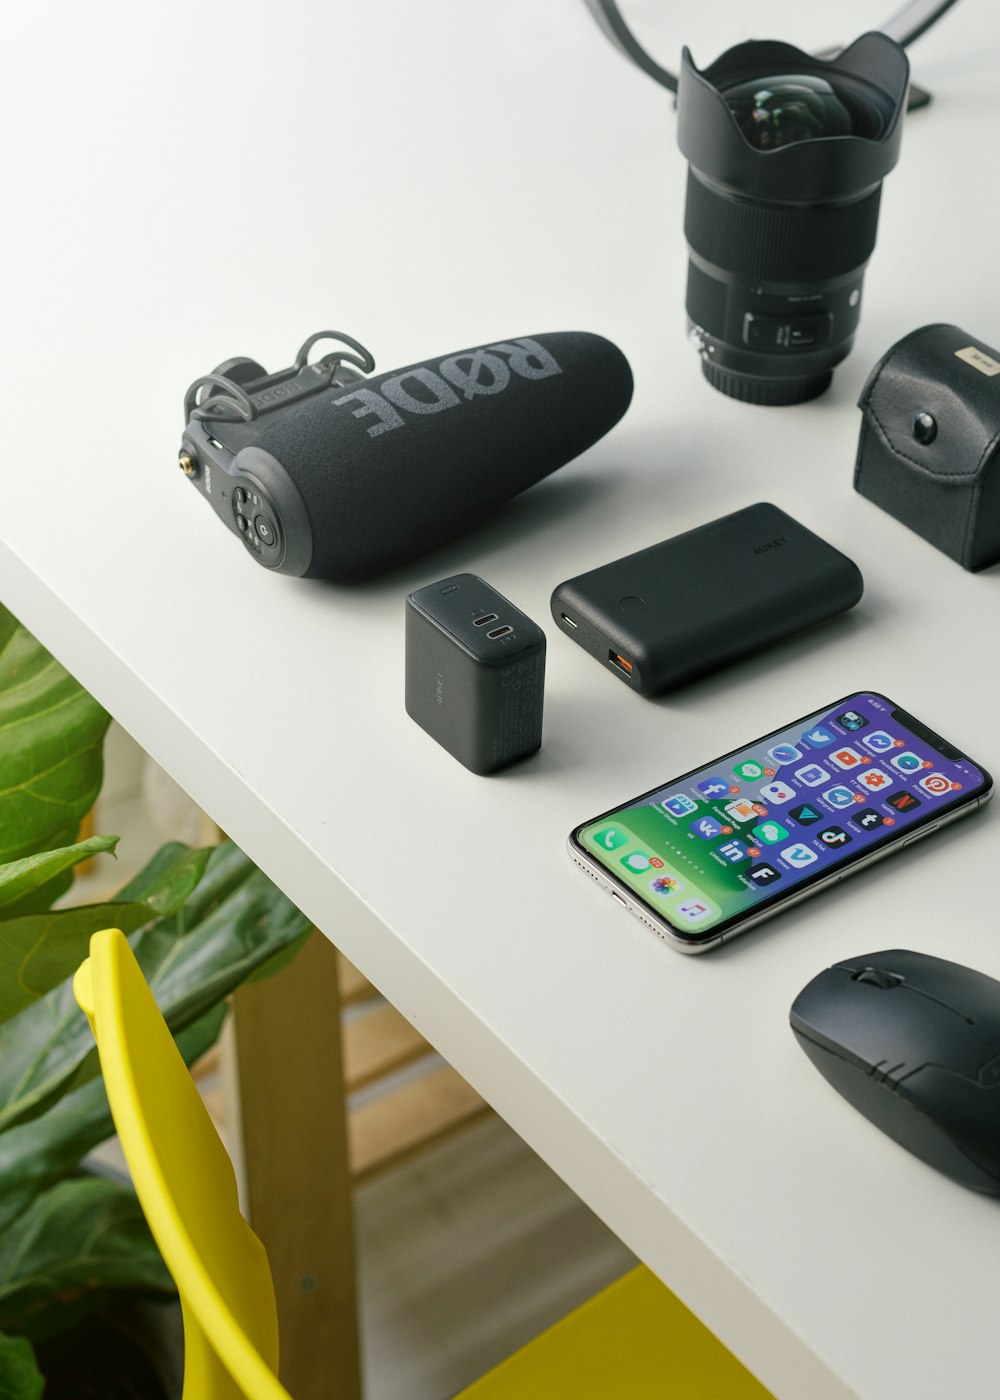 Mouse inalámbrico Logitech negro y gris junto al teléfono inteligente Samsung Android negro